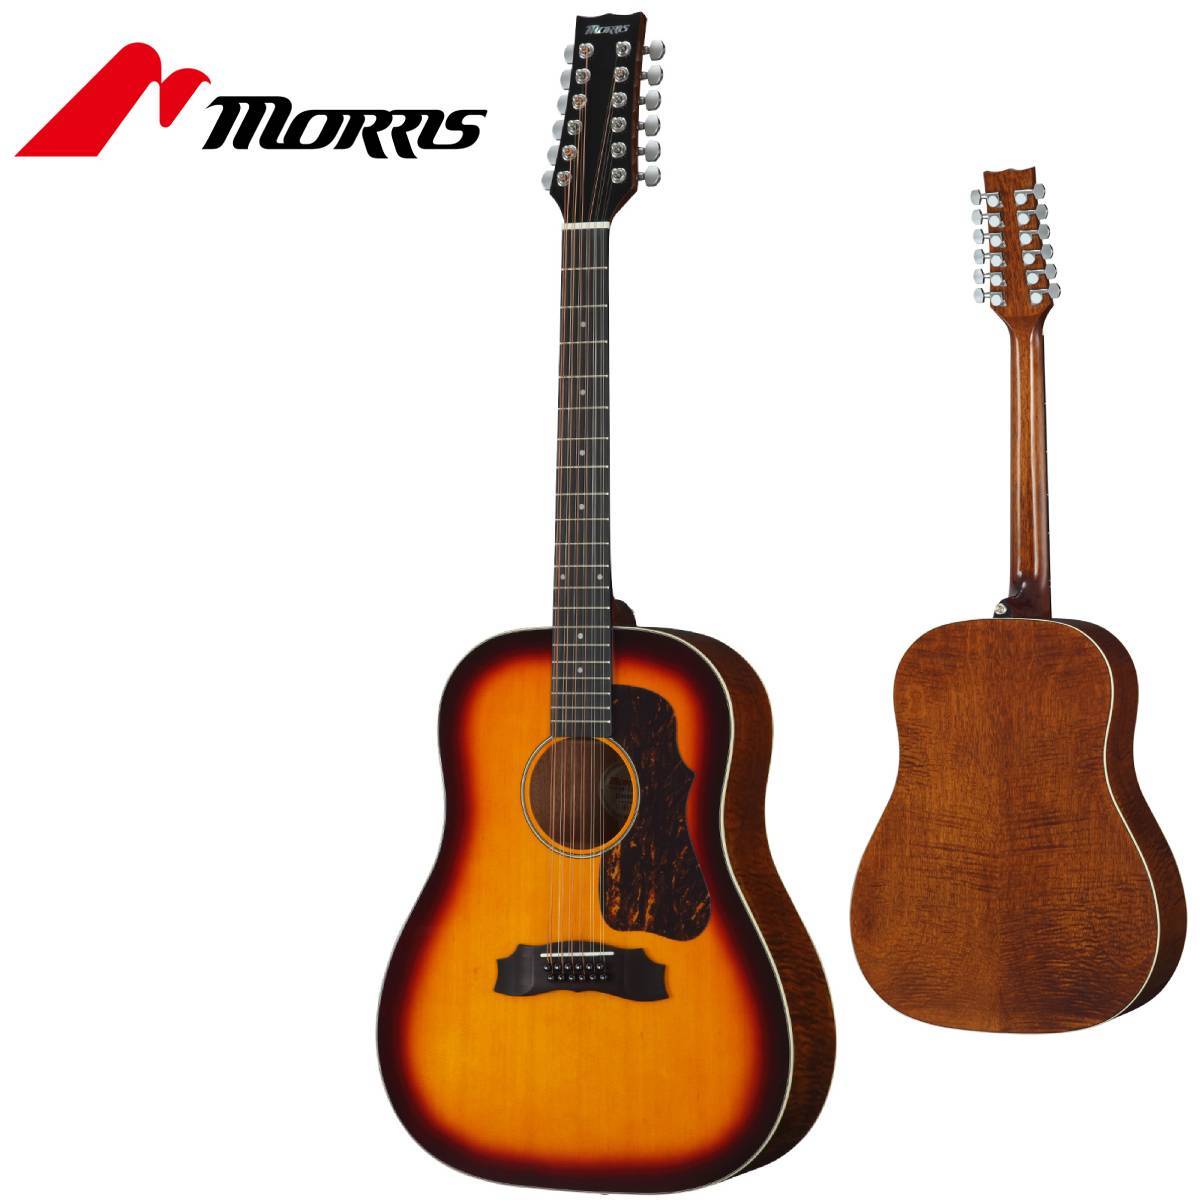 Morris GB-021 12-Strings Guitar -PERFORMERS EDITION- 《12弦ギター 